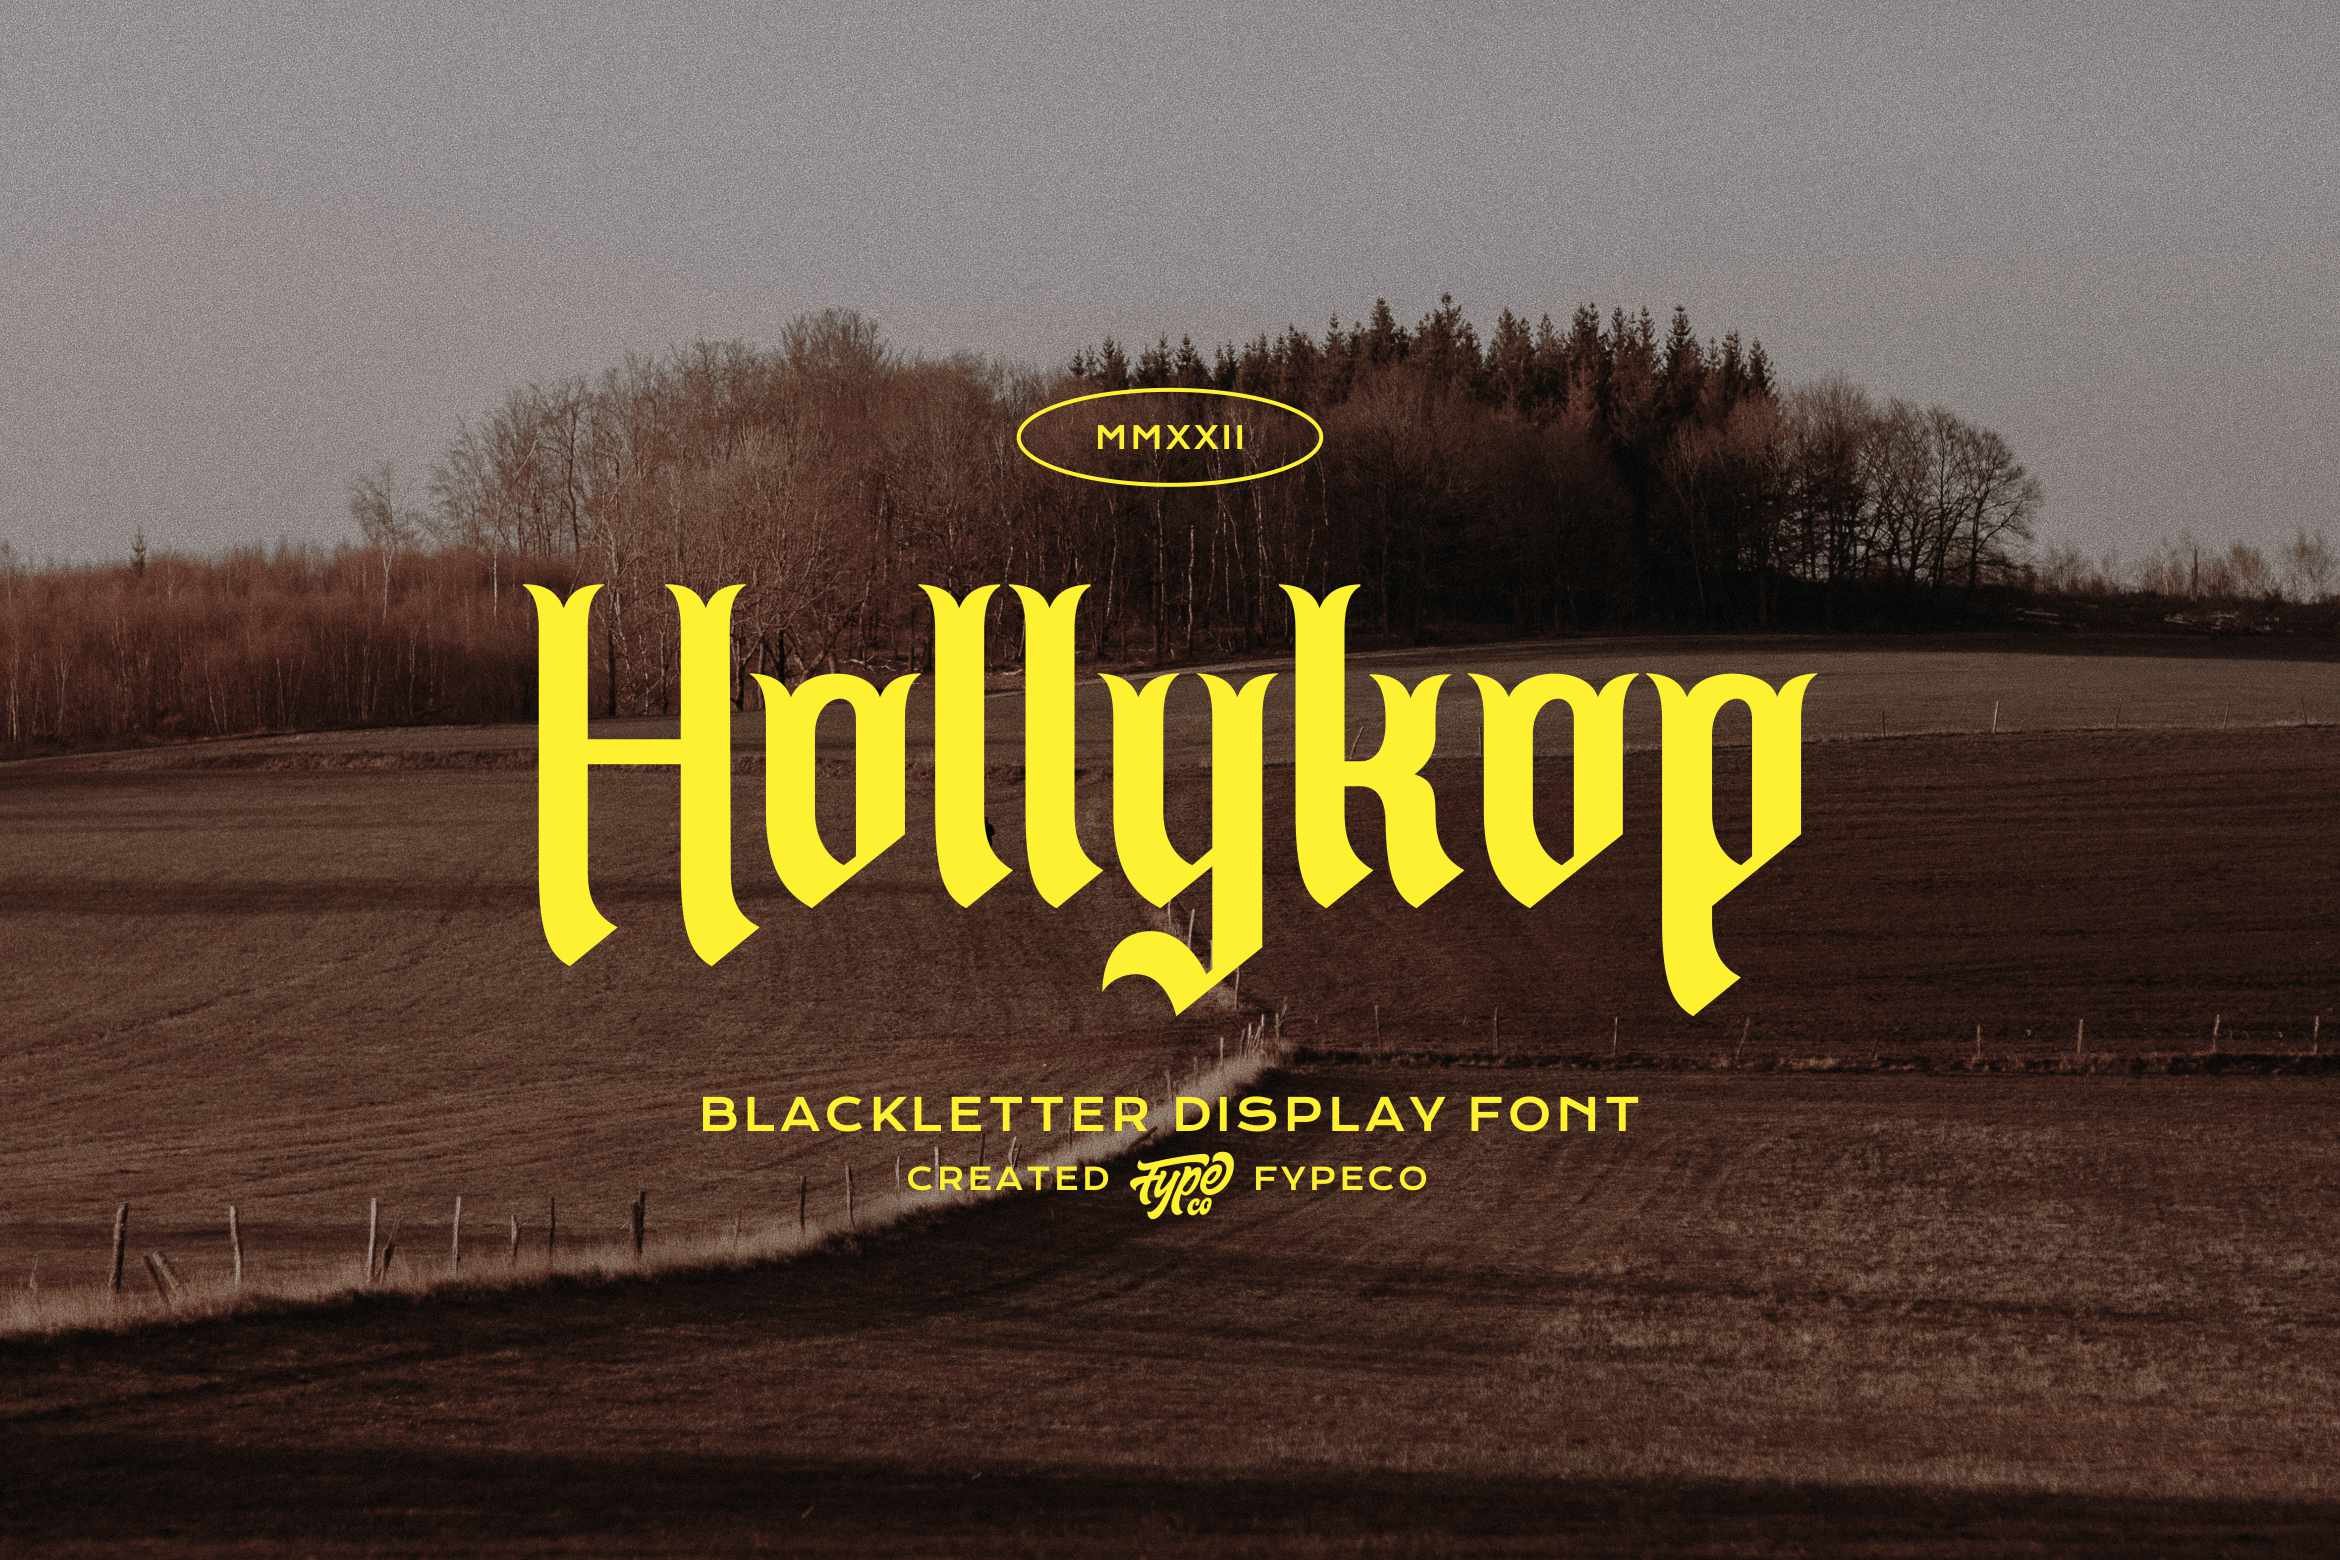 Hollykop-Blackletter Display Font cover image.